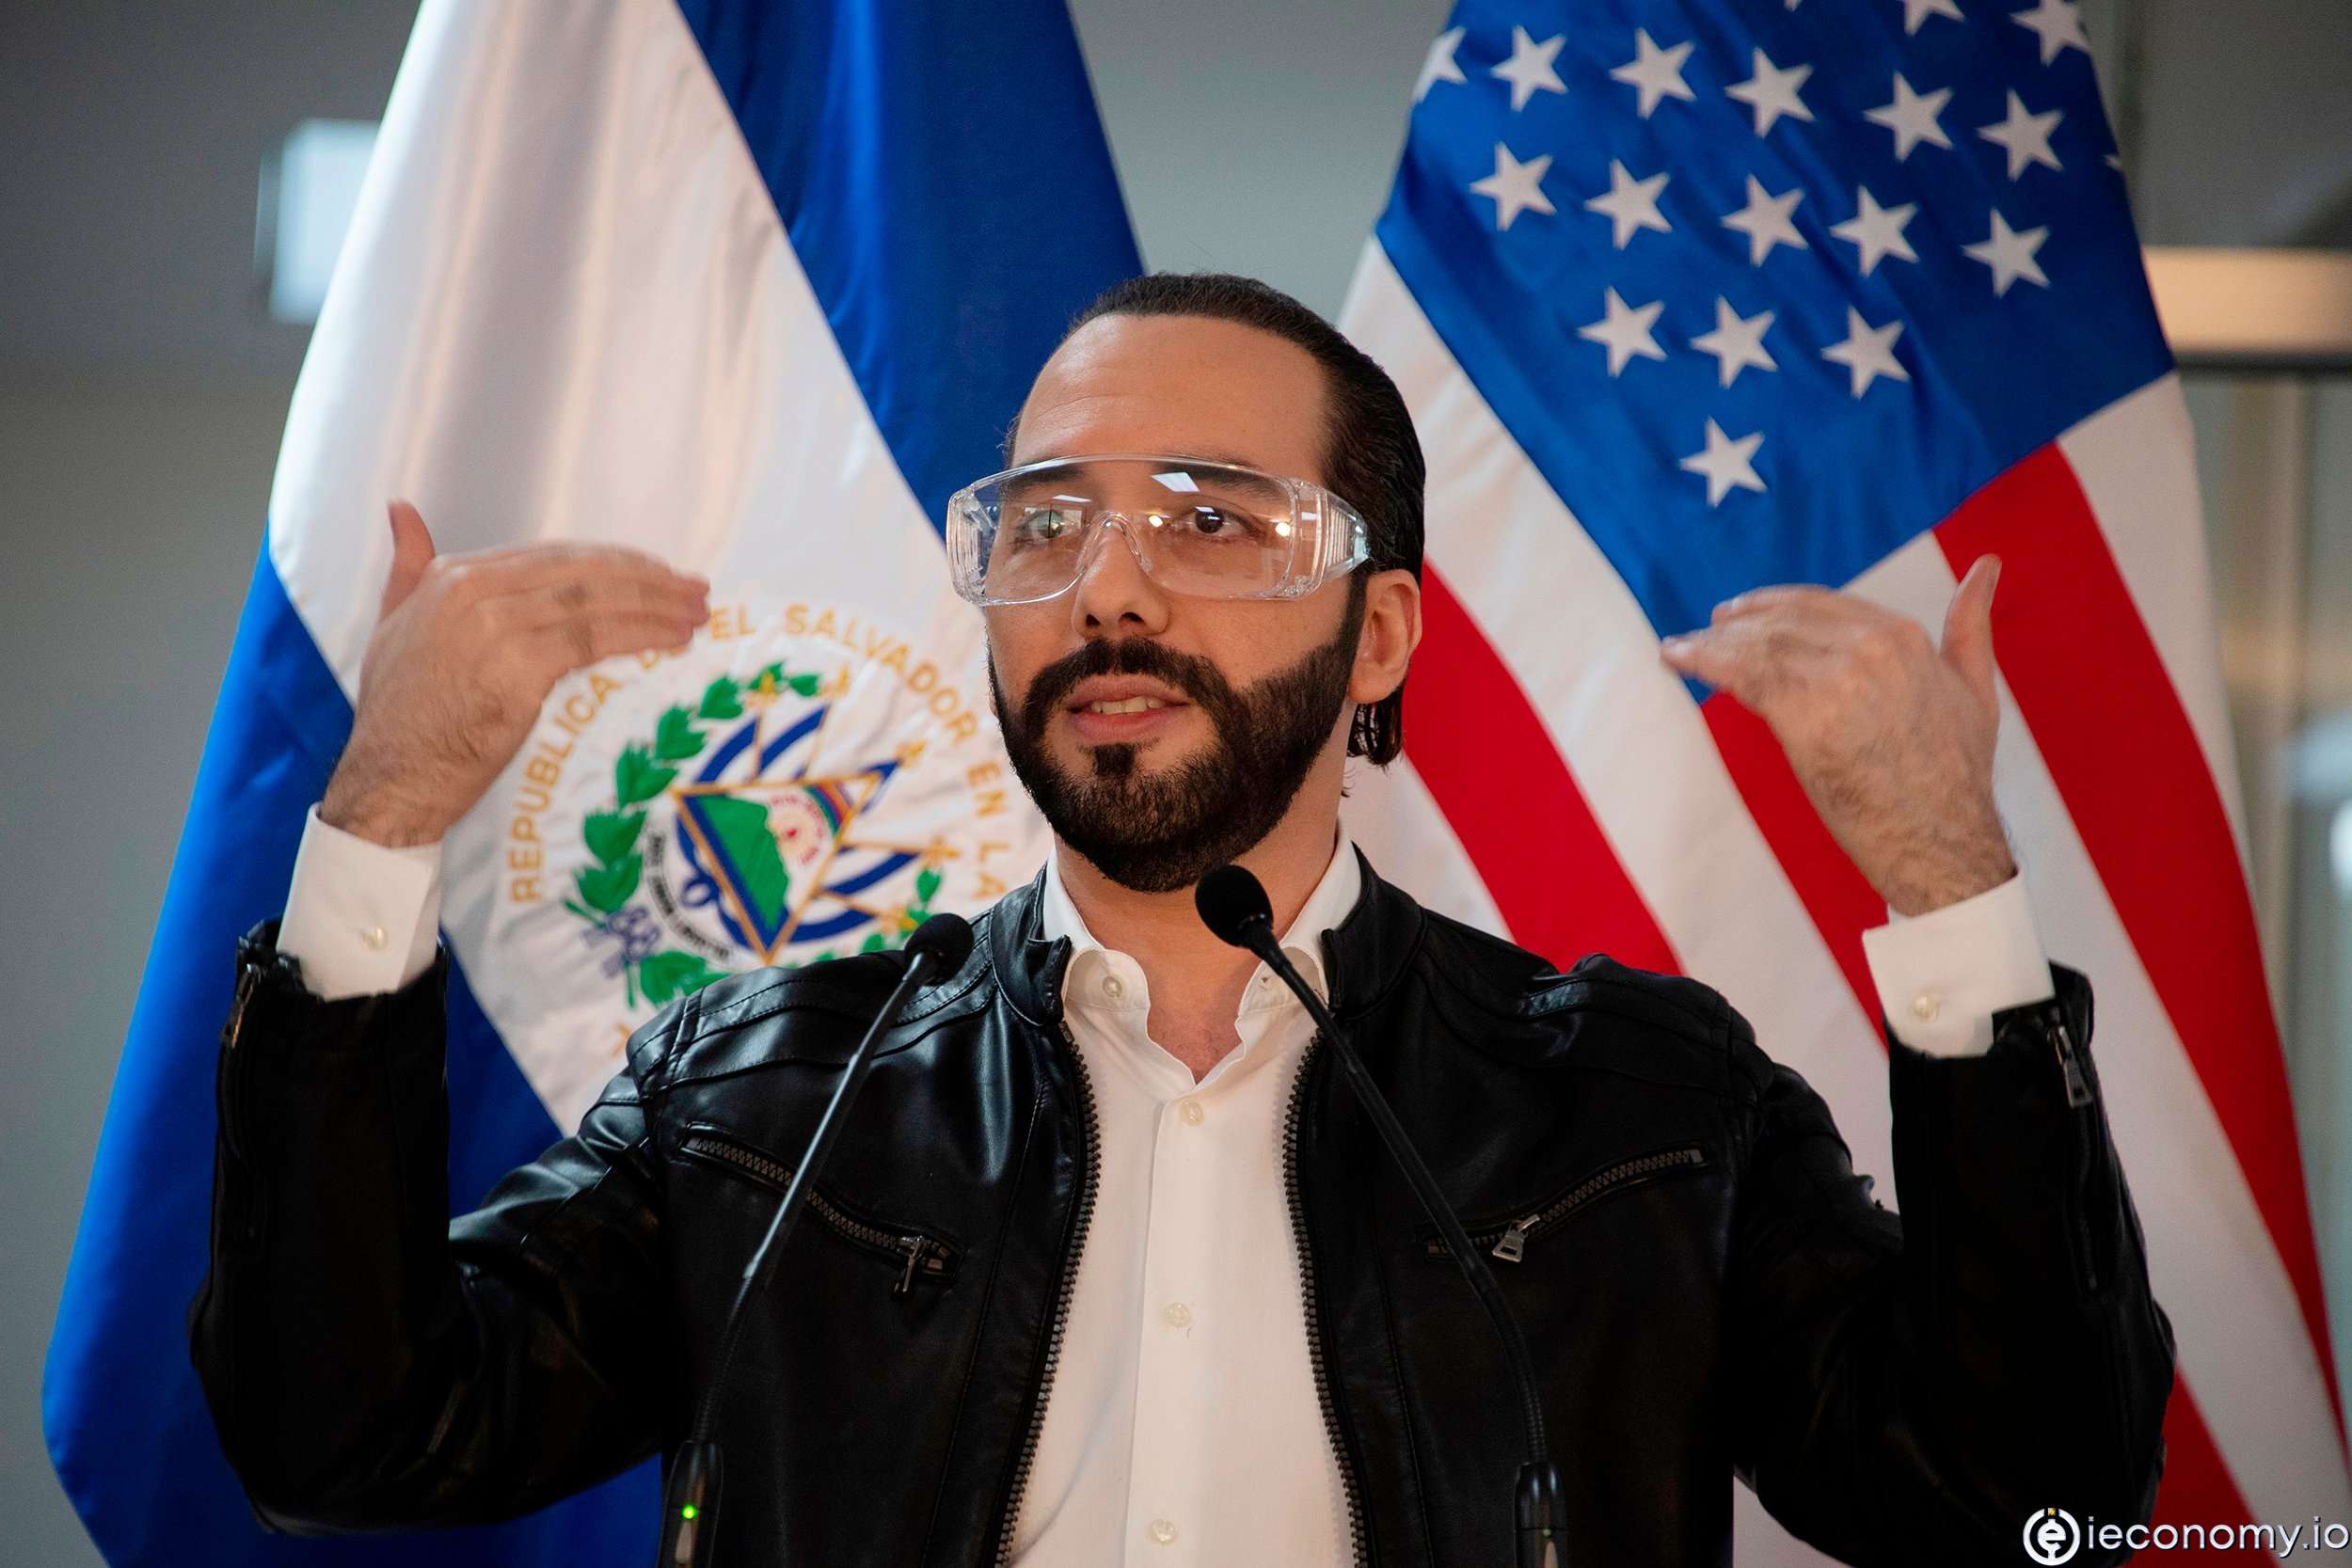 President of El Salvador Reacted to Criticism of Bitcoin